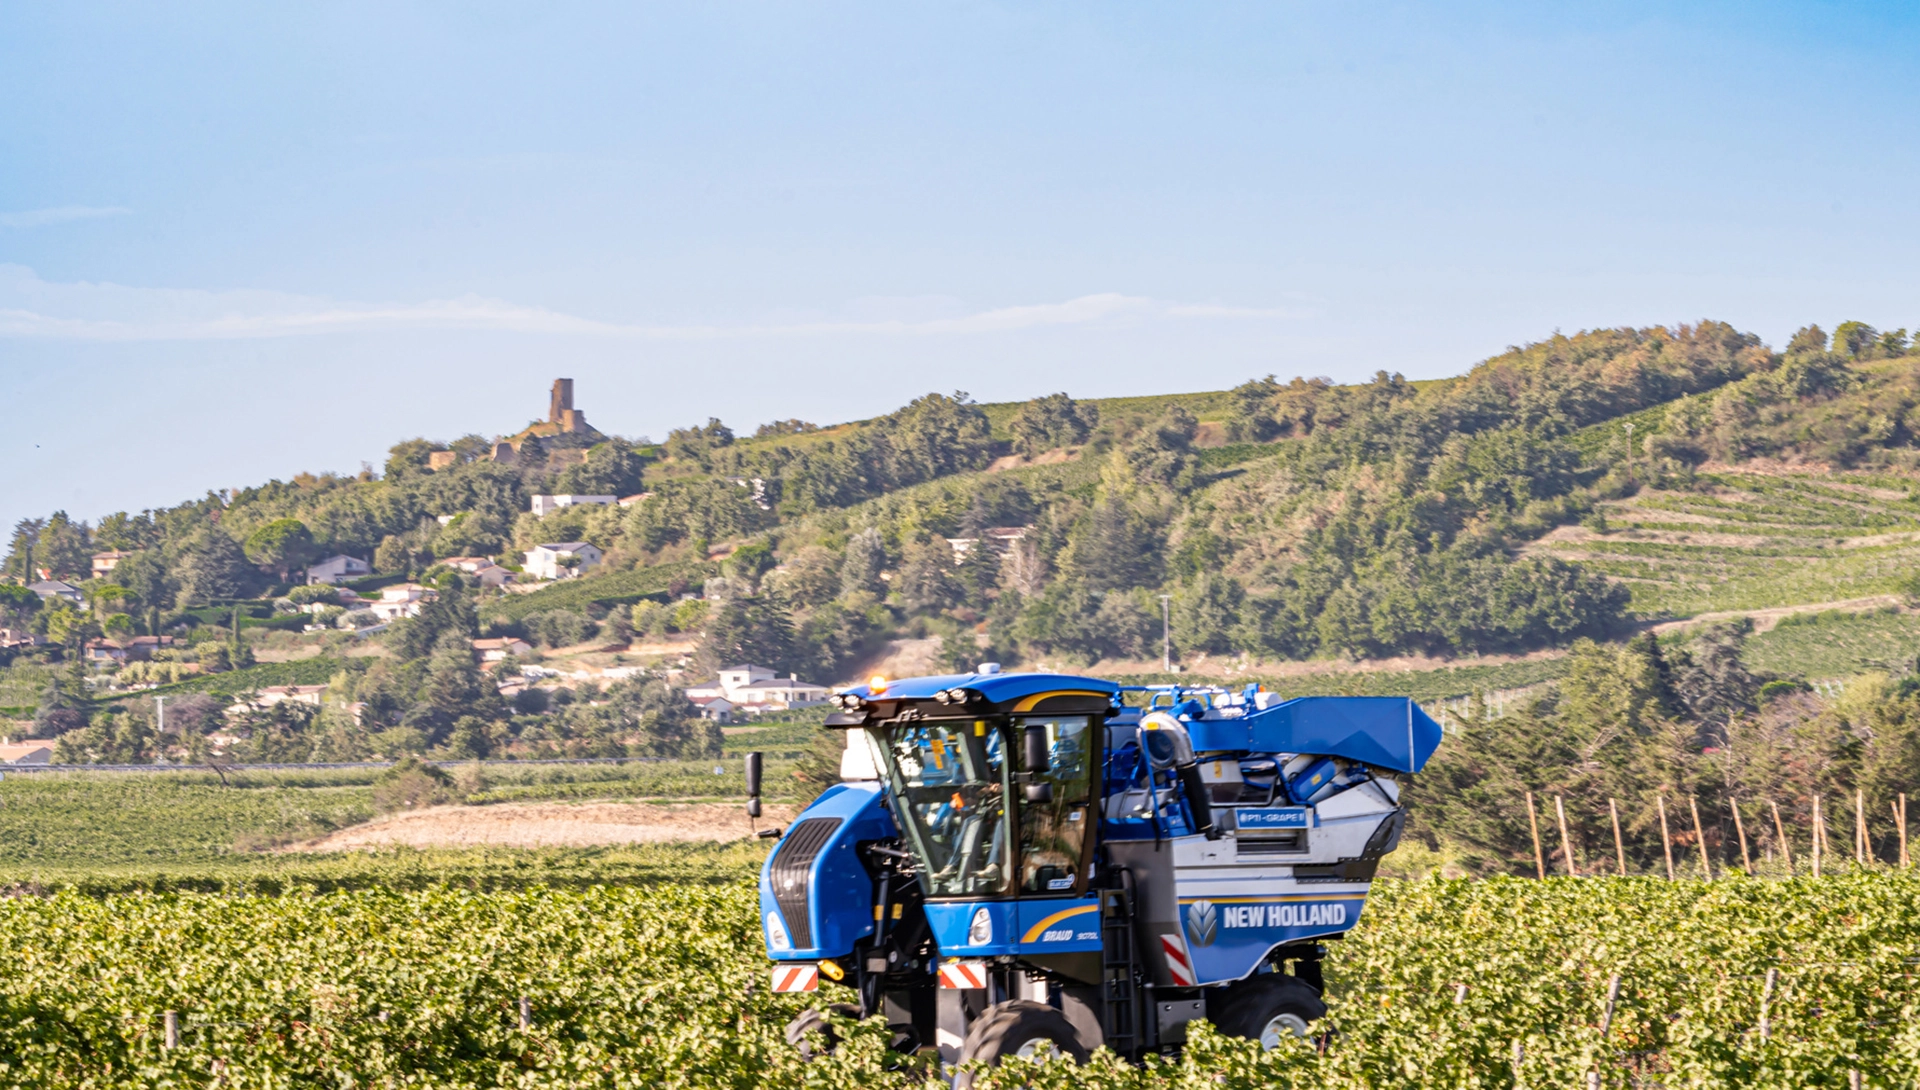 Braud High Capacity Grape Harvester on the field